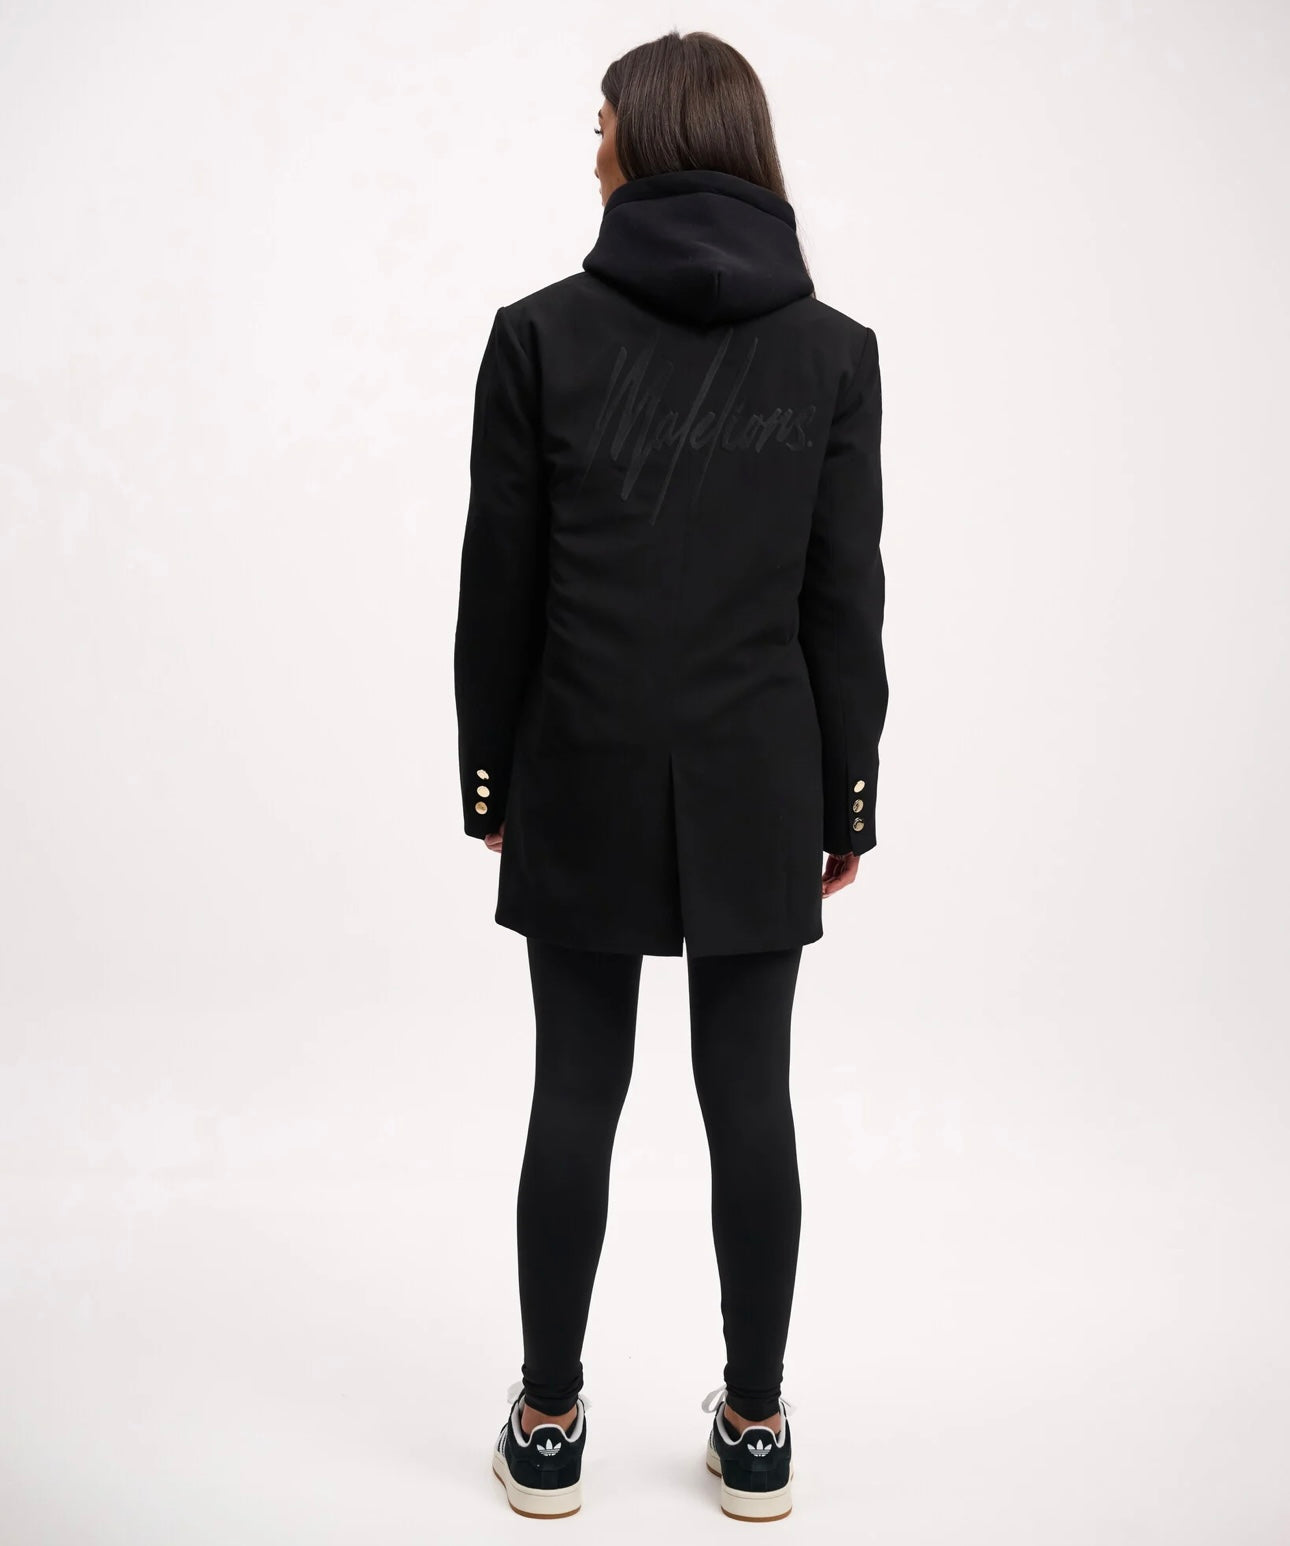 Malelions women oversized blazer - black